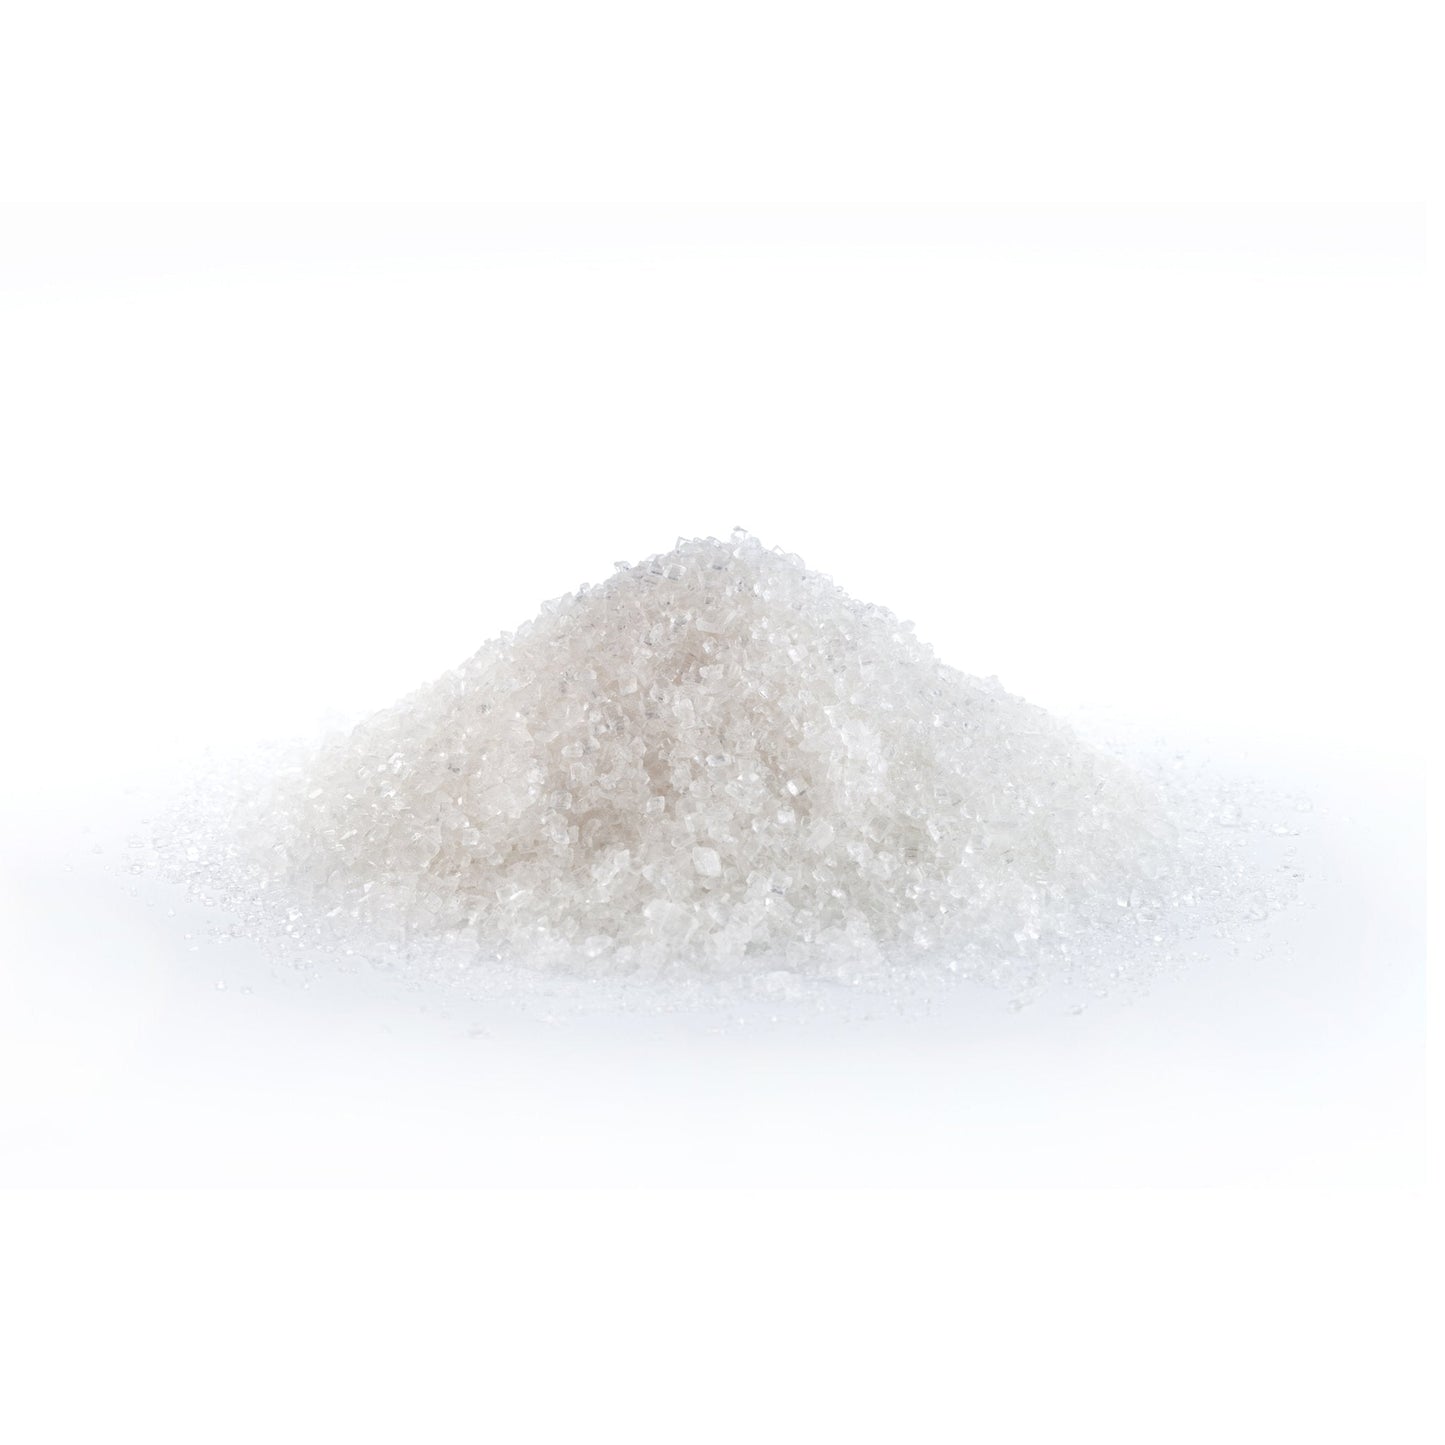 Standard Granulated Sugar (Coarse)